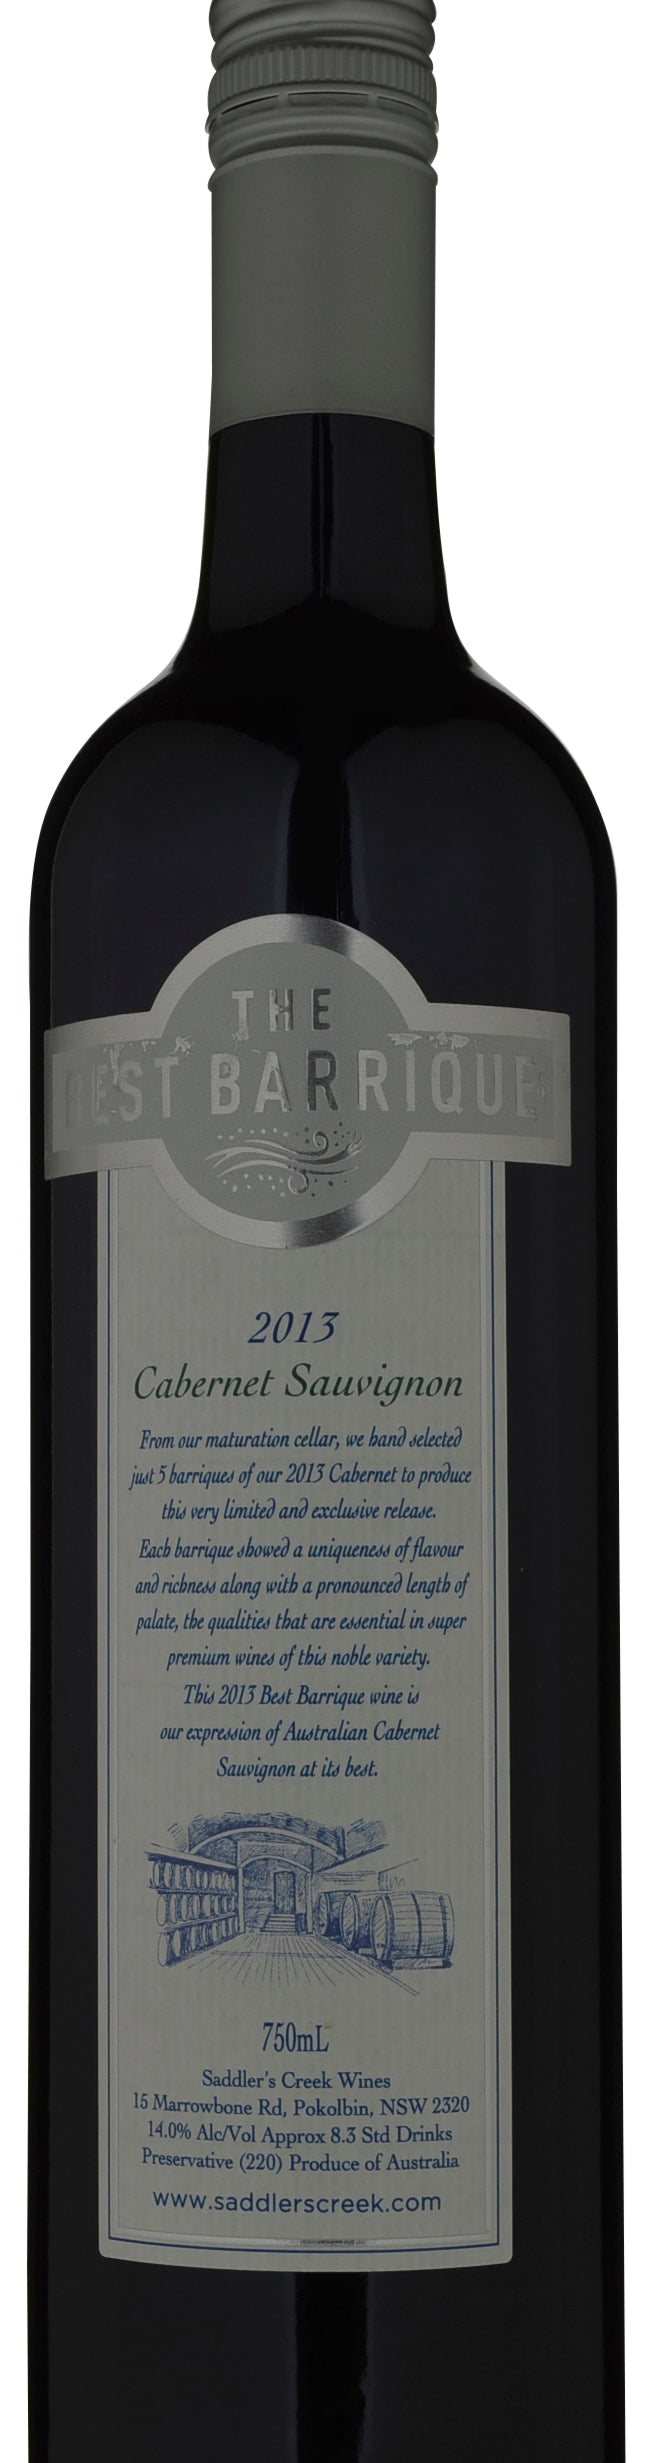 Saddler's Creek Wines Best Barrique Cabernet Sauvignon 2013